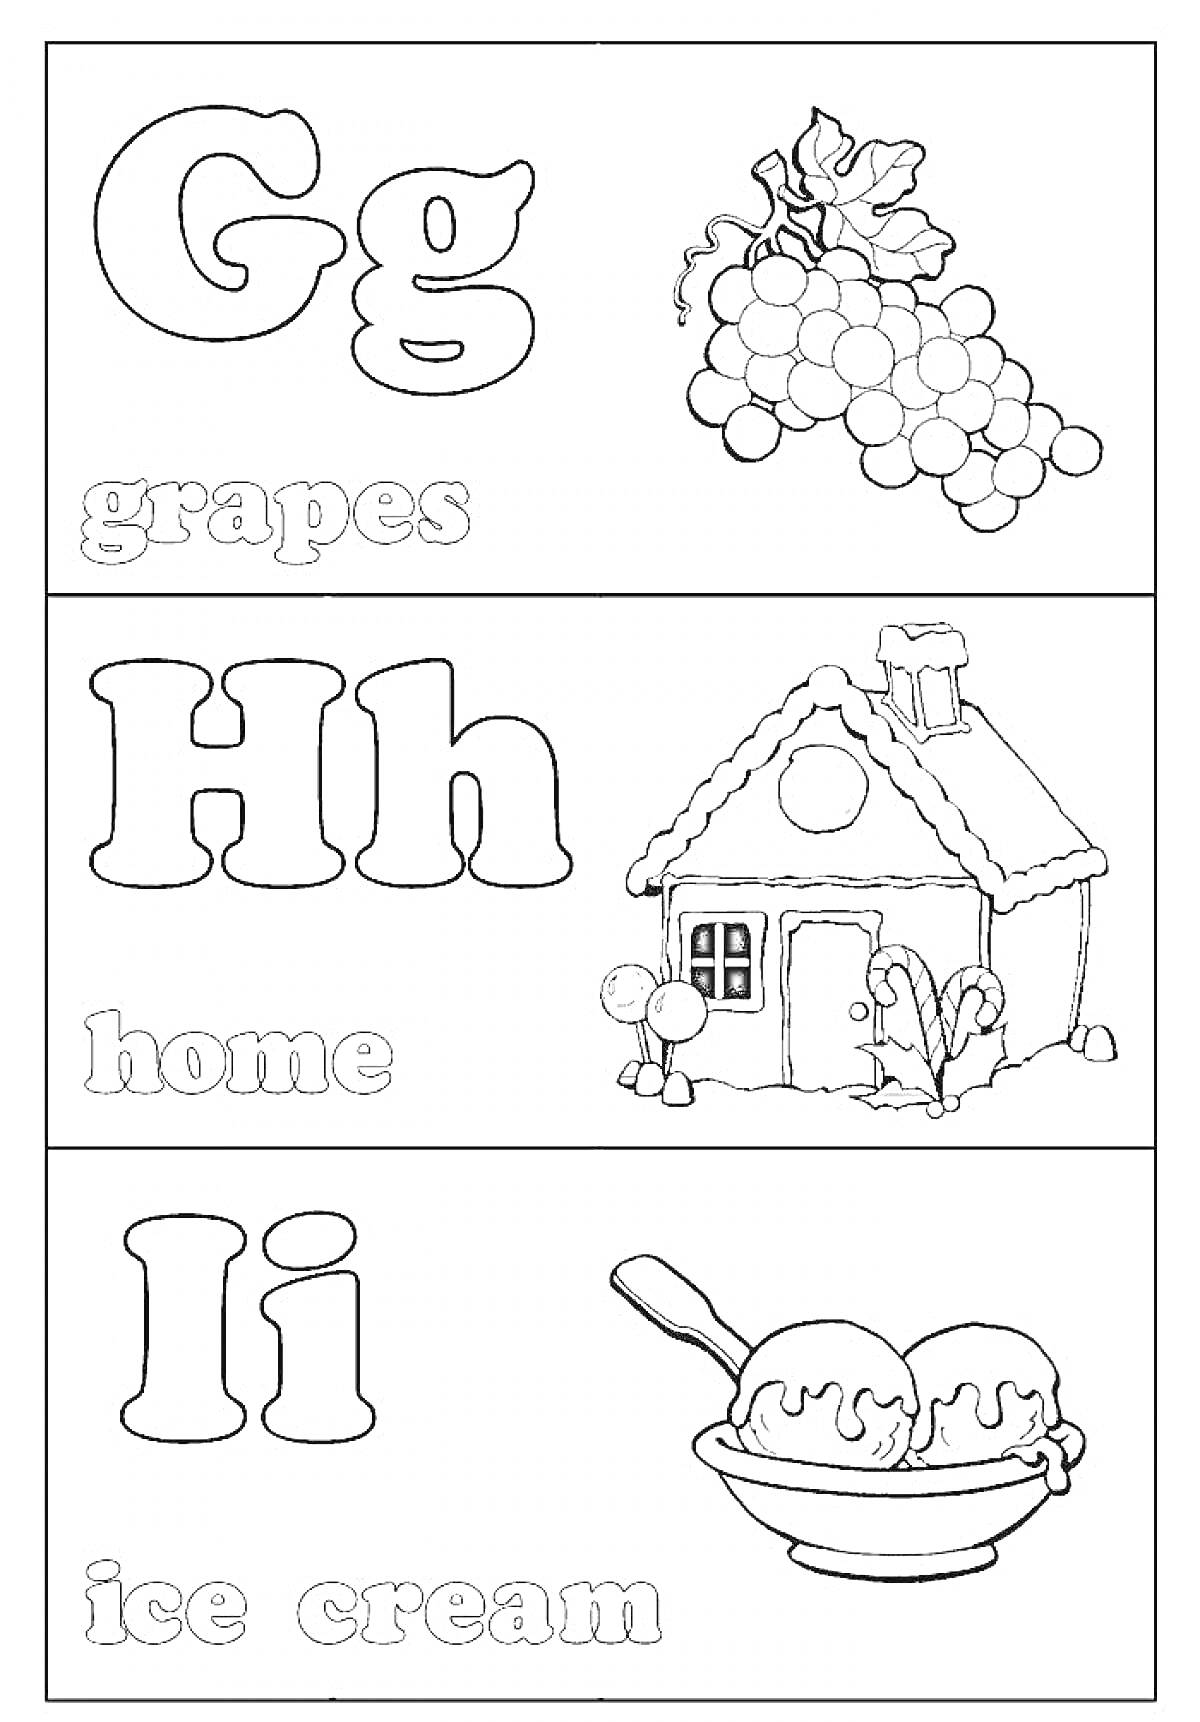 Раскраска Английский алфавит: g - grapes, h - home, i - ice cream